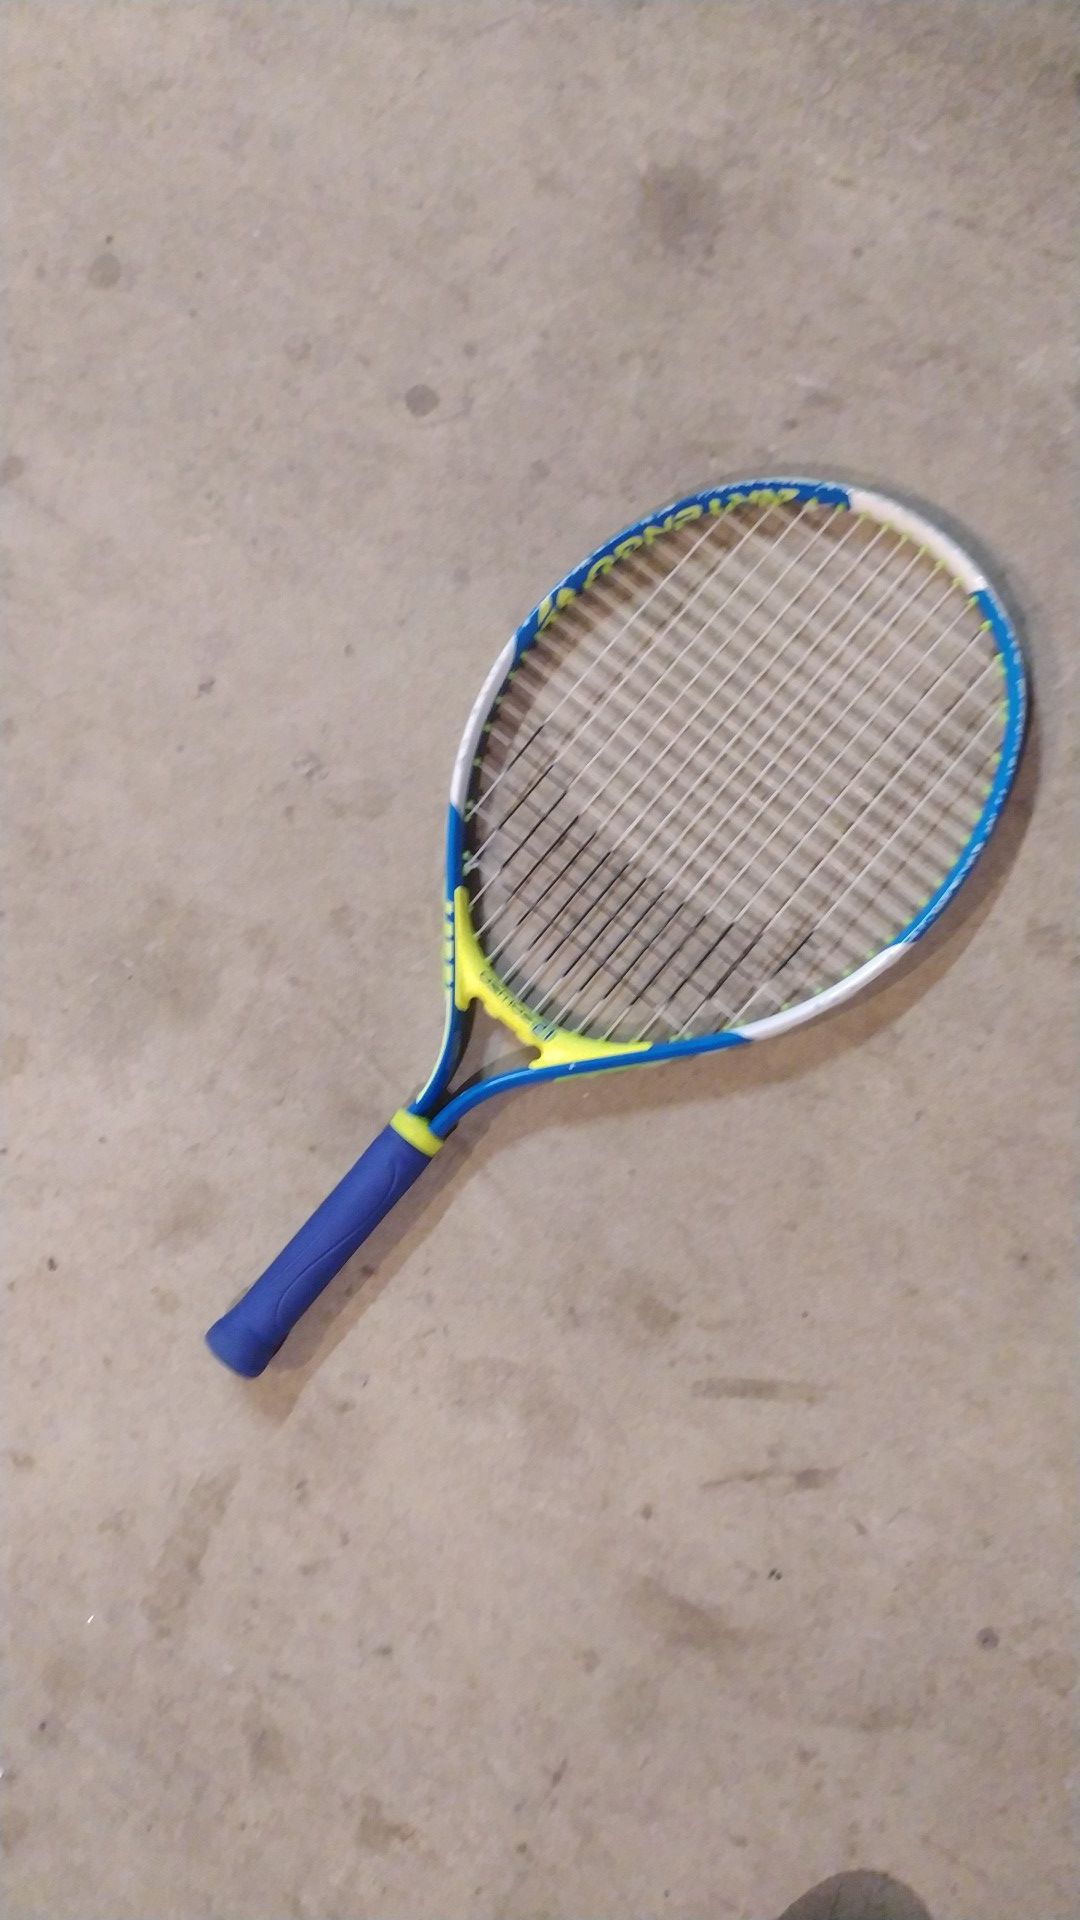 Kids tennis racket